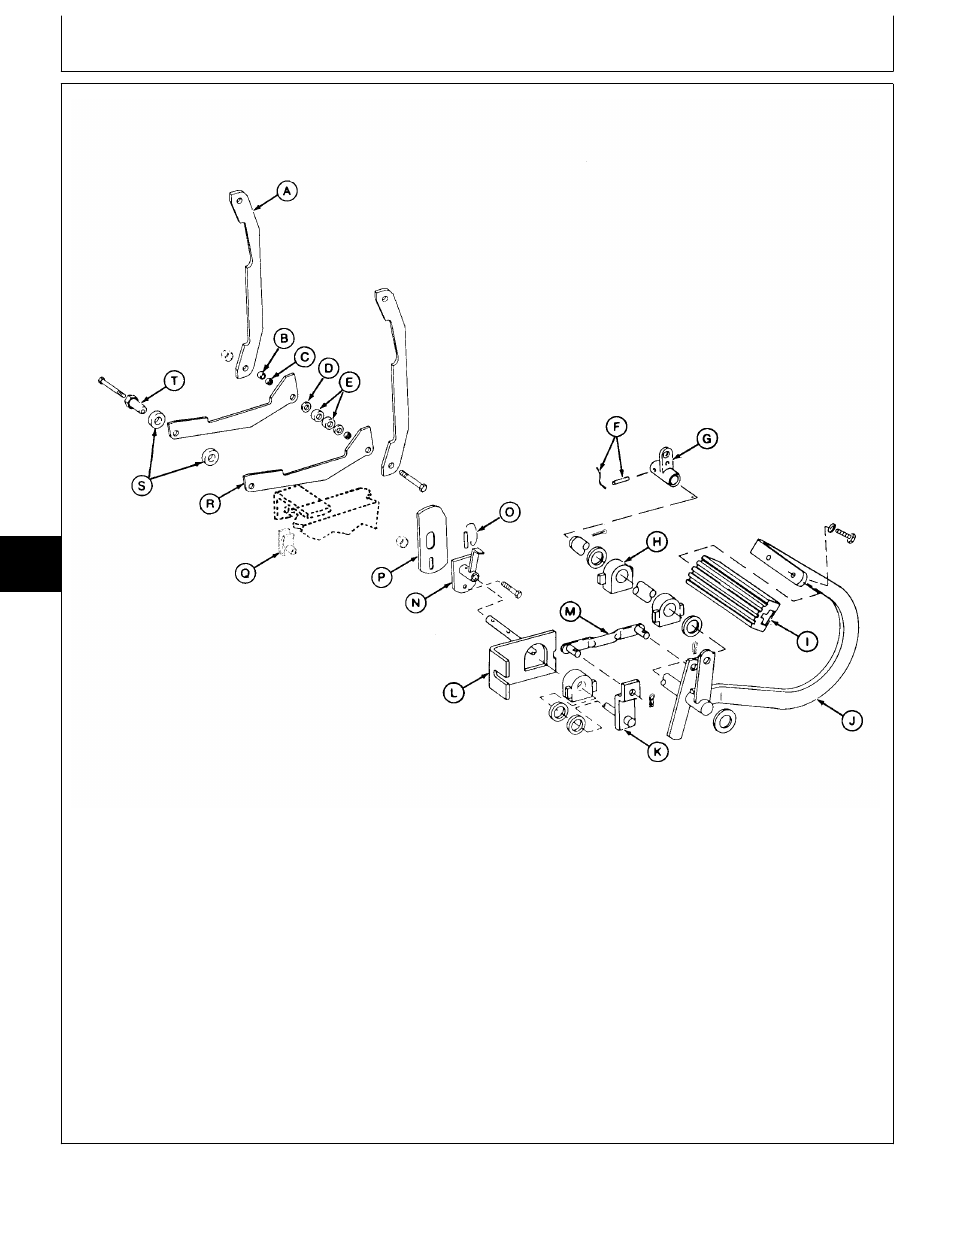 John Deere 318 User Manual | Page 182 / 440